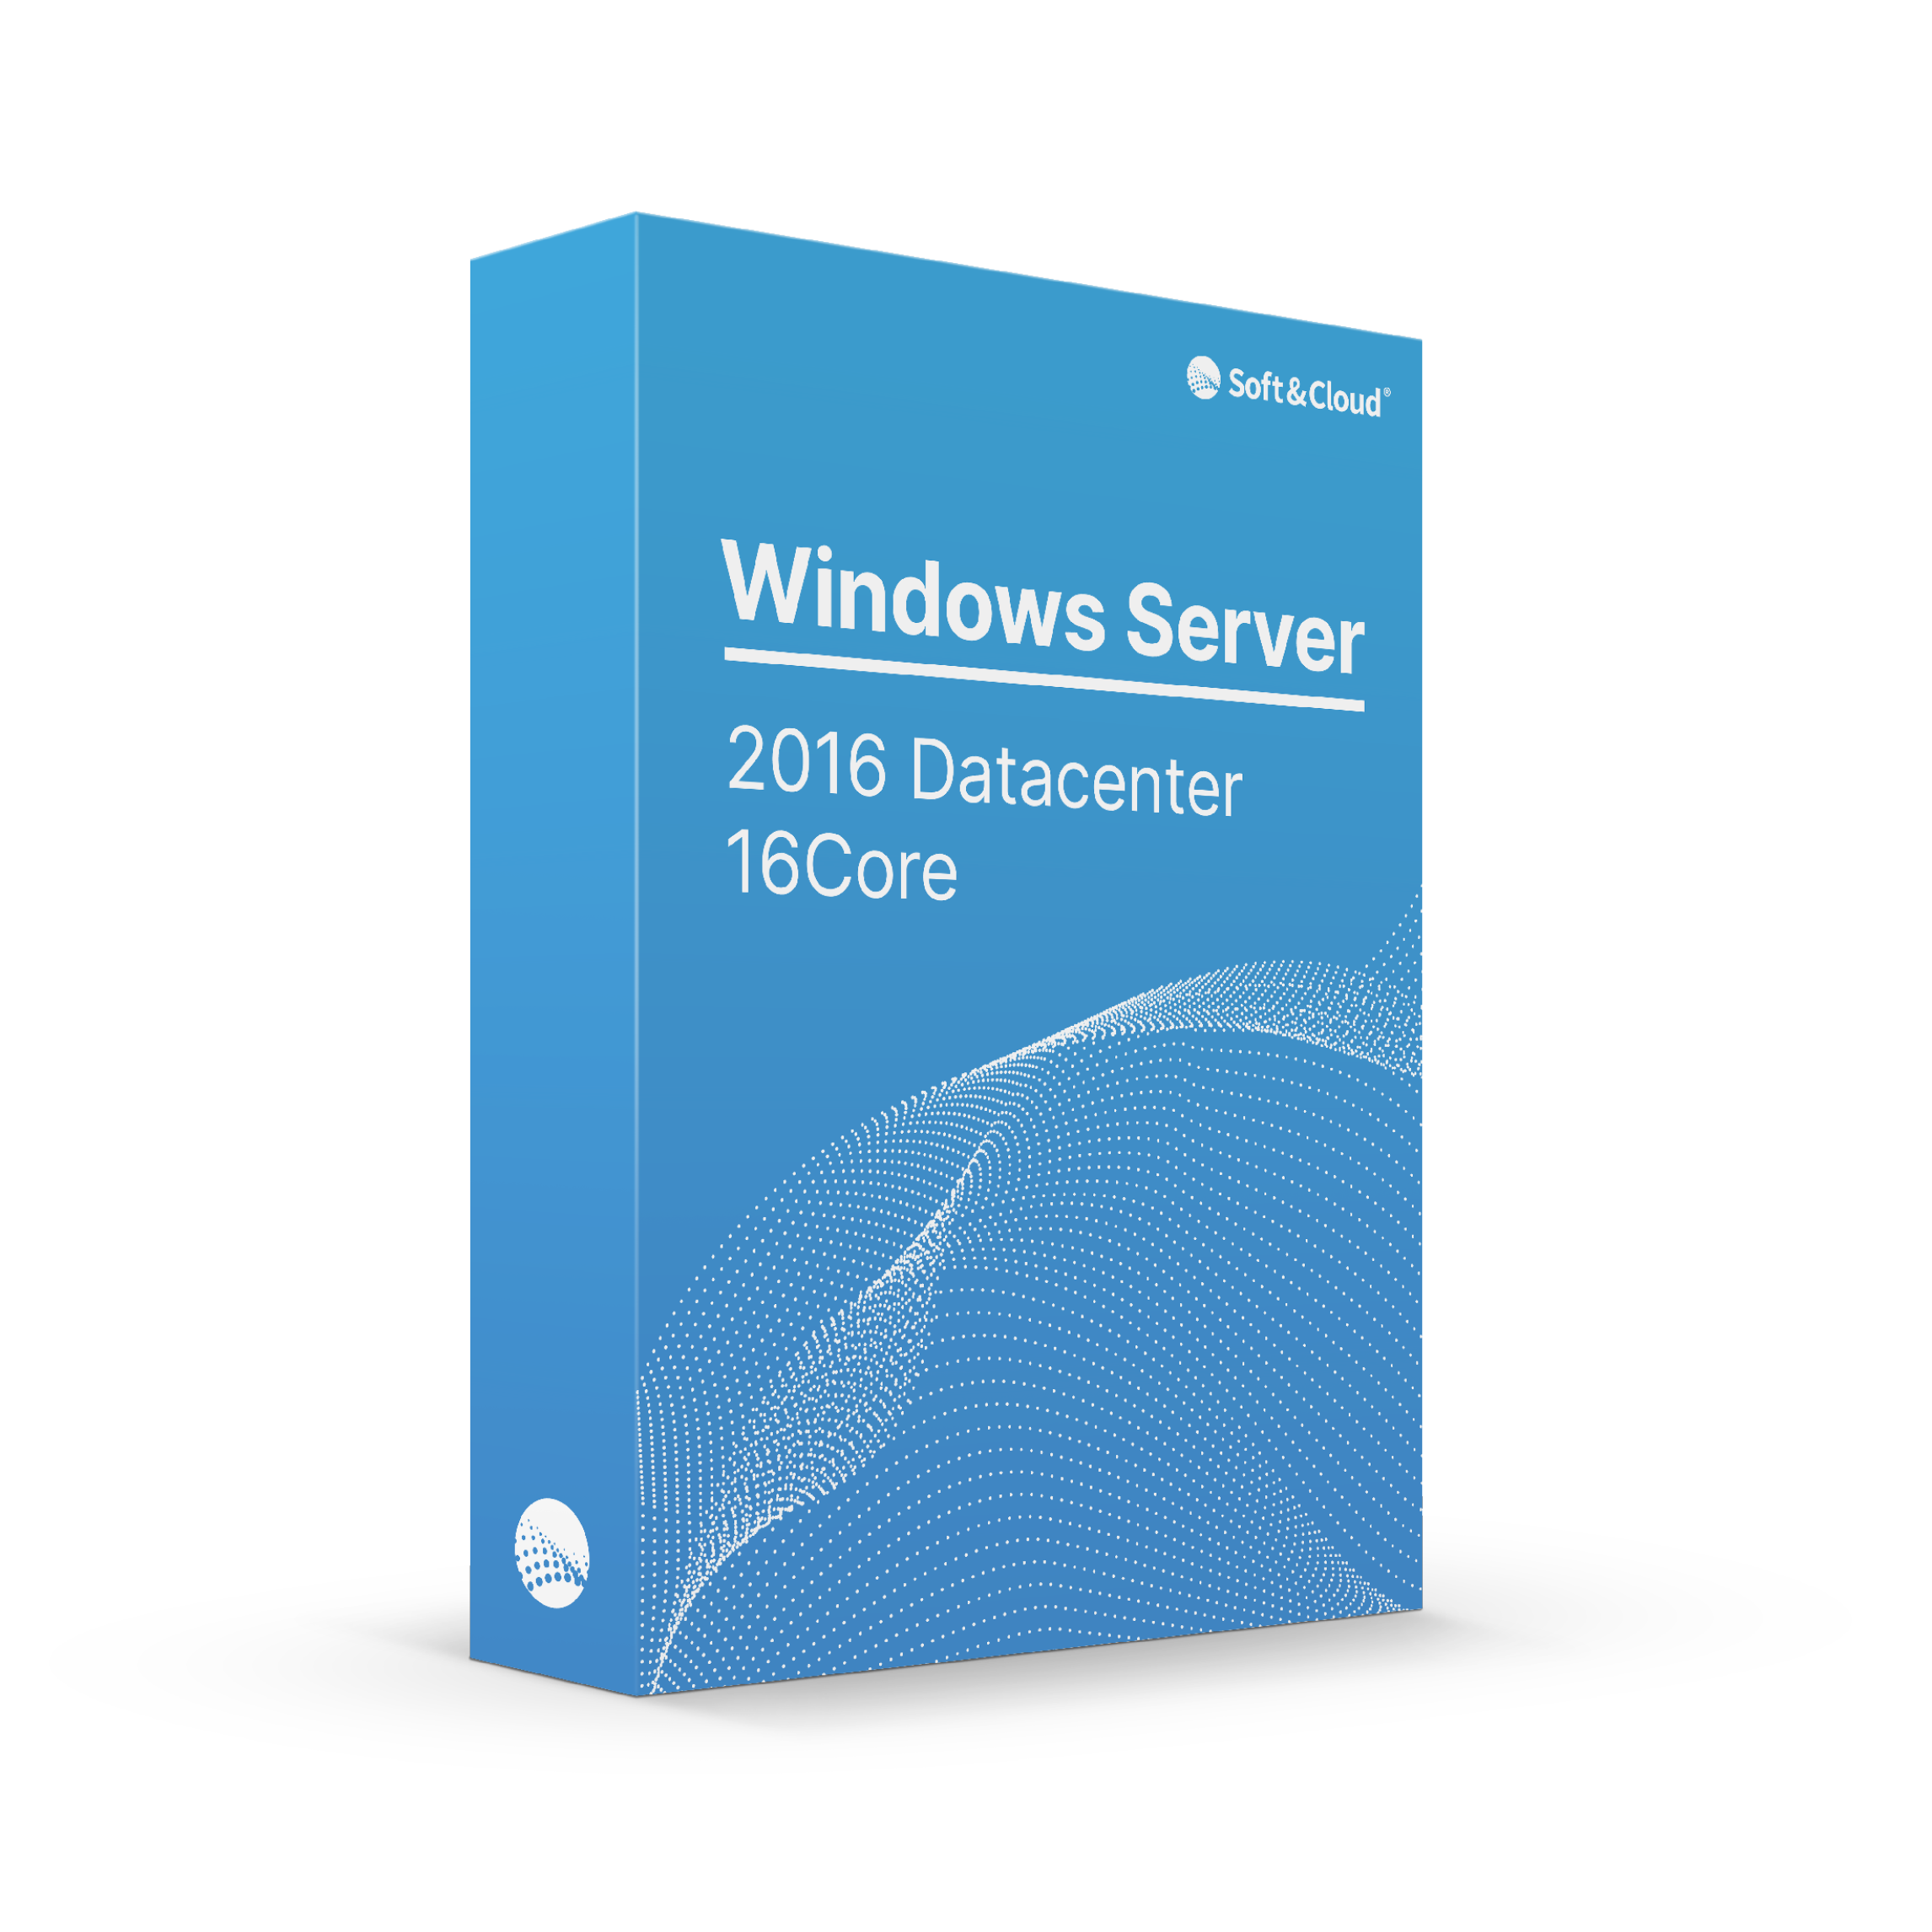 Windows Server 2016 Datacenter 16Core